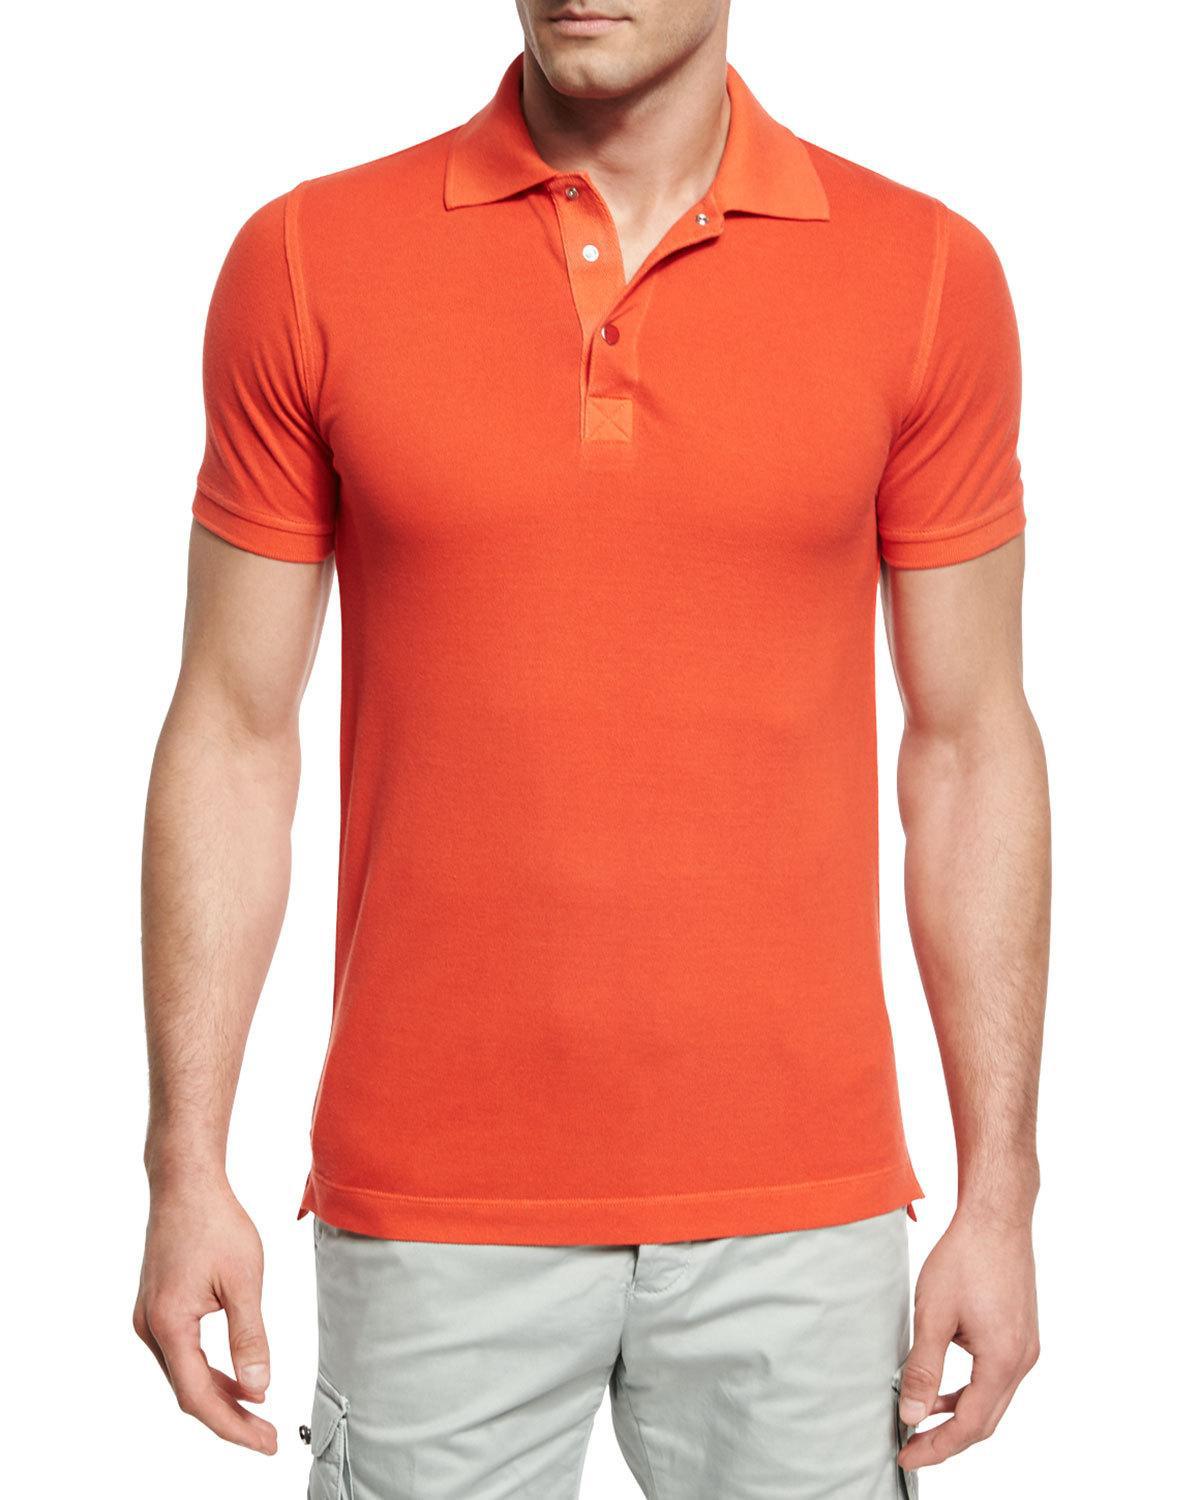 Lyst - Kiton Piqué Snap-front Polo Shirt in Orange for Men